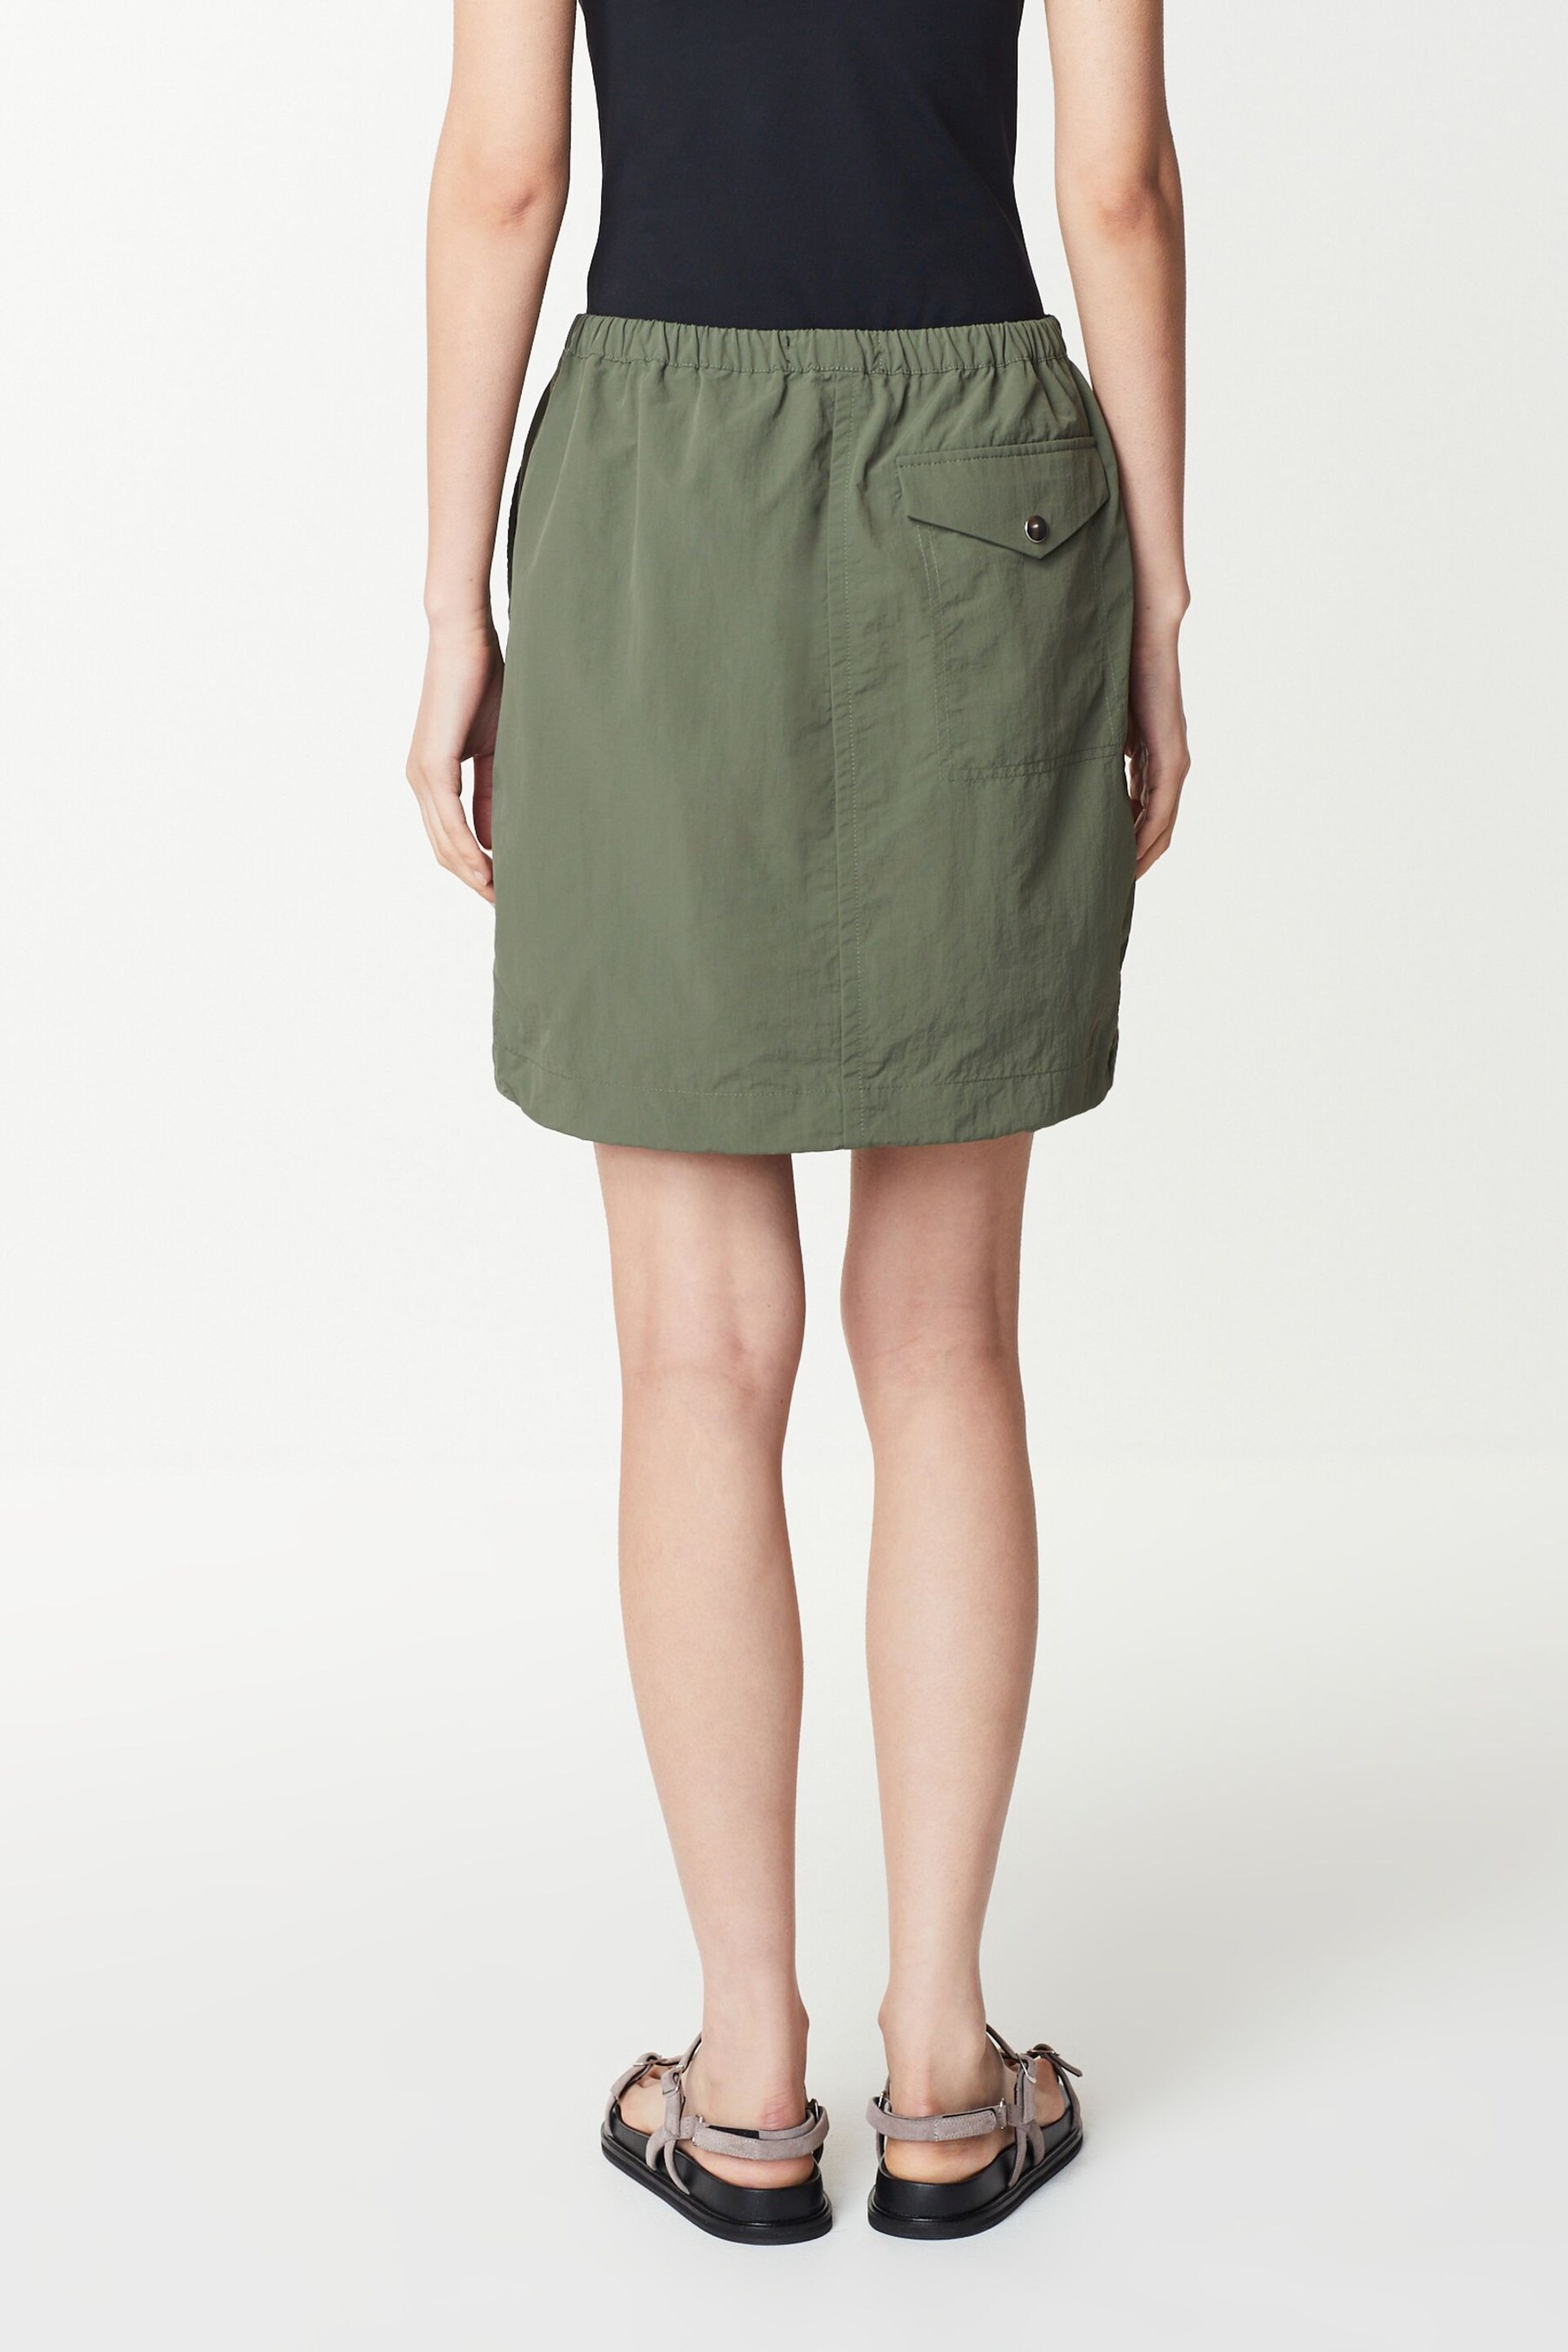 Khaki Green Cargo Mini Skirt - Image 3 of 6